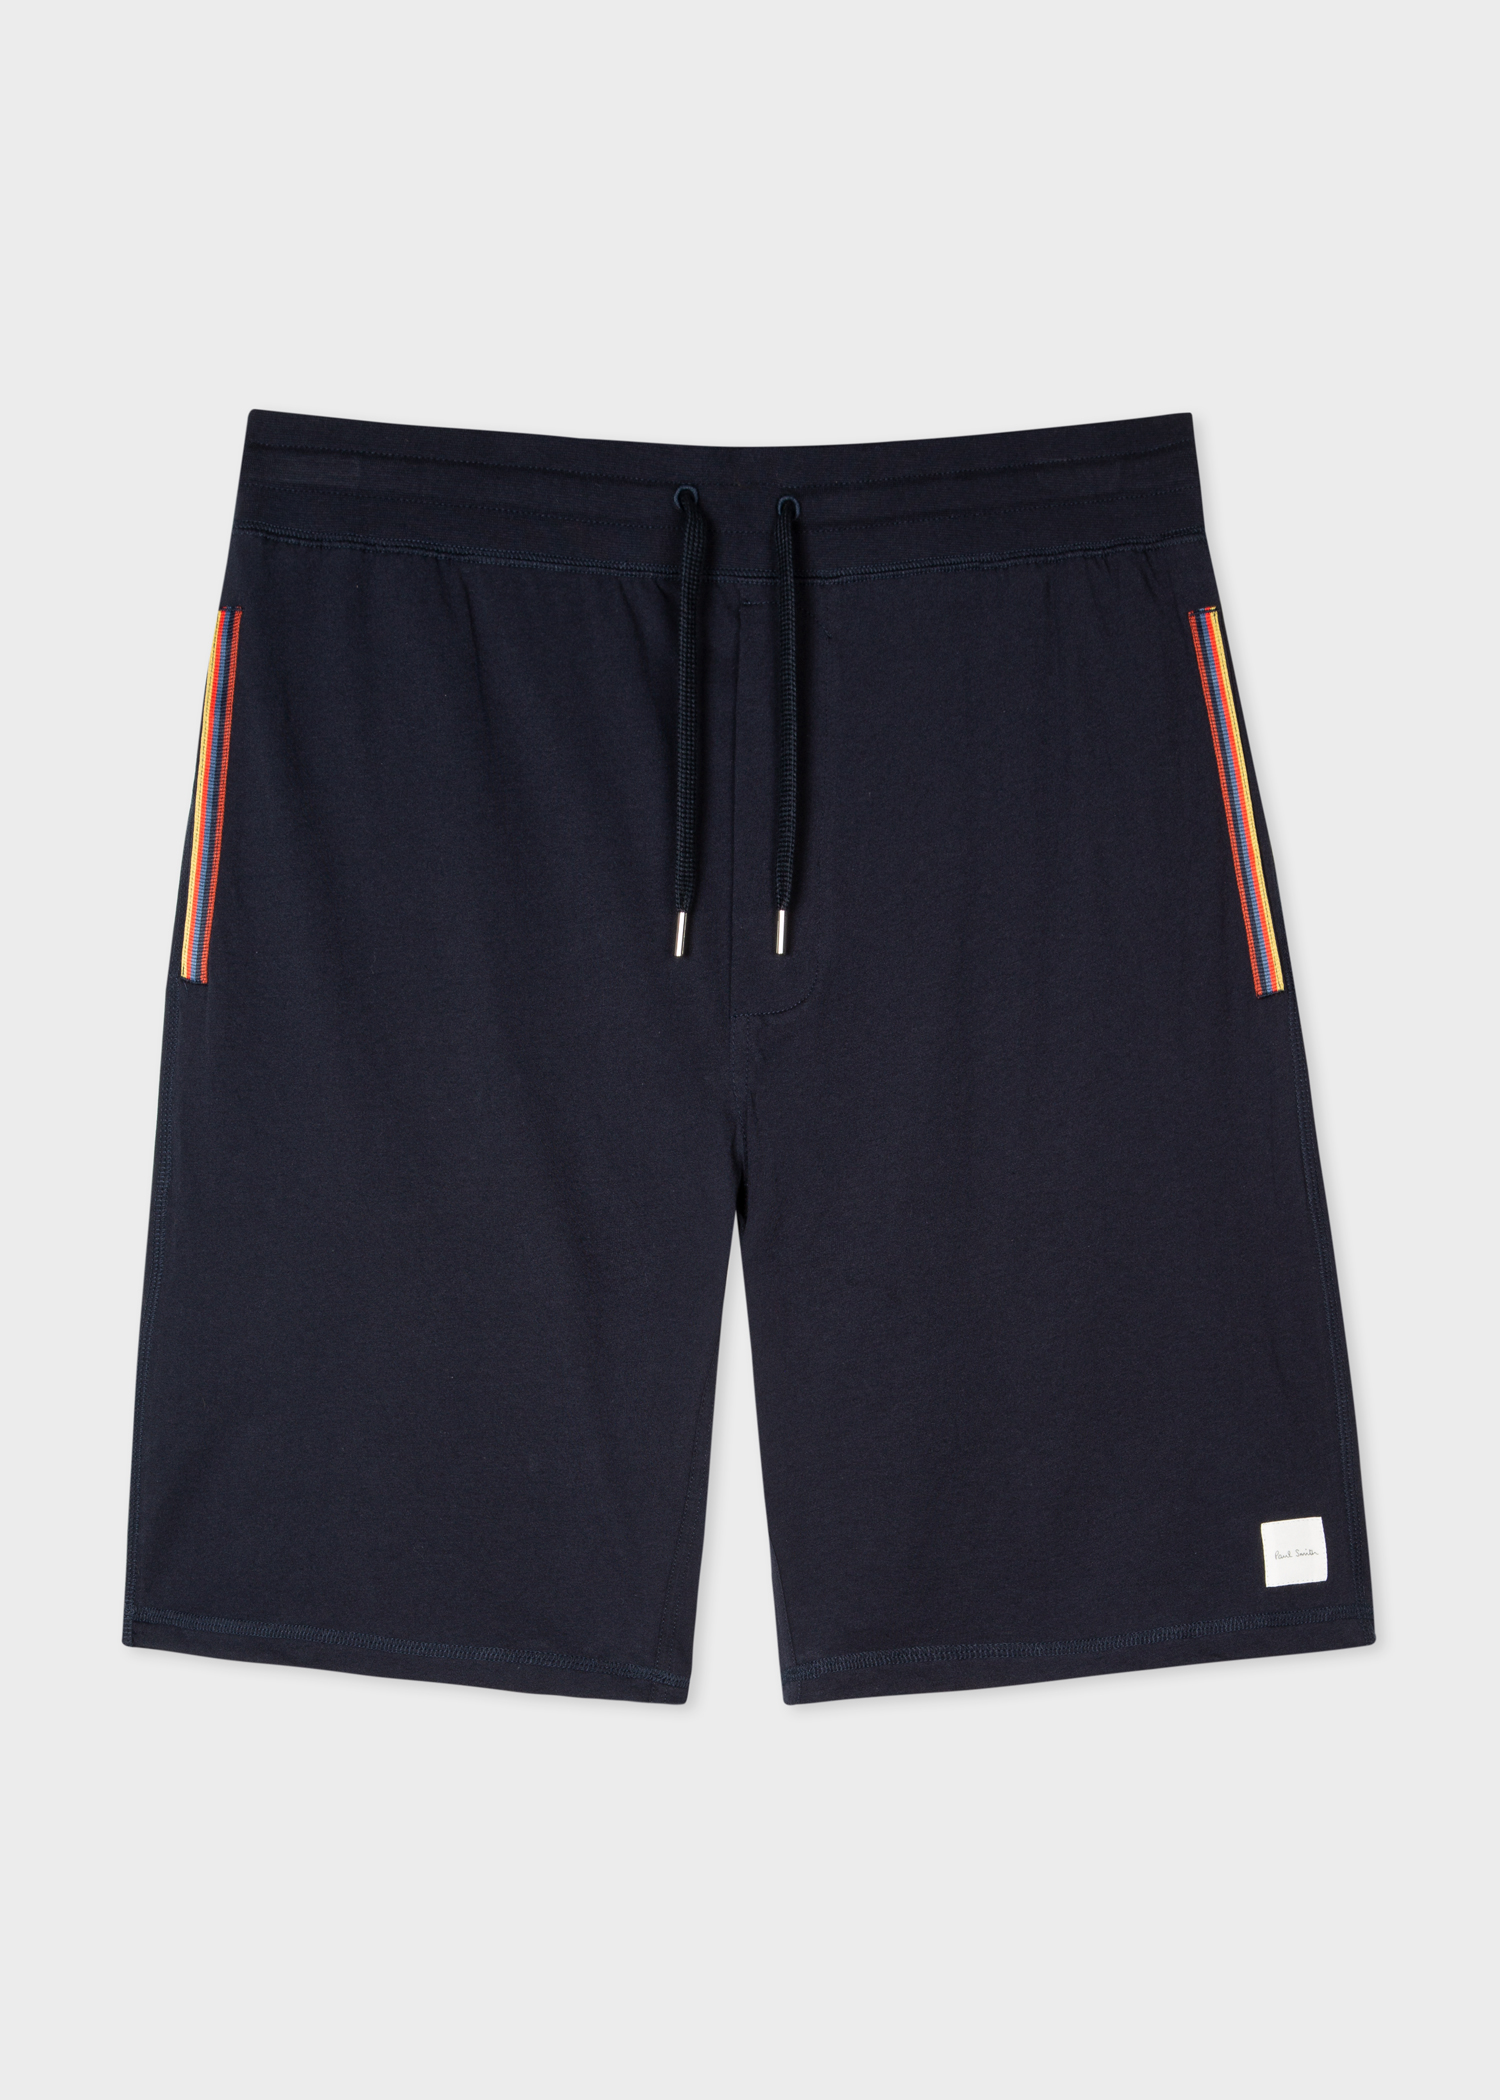 Men's Navy Jersey Cotton Lounge Shorts